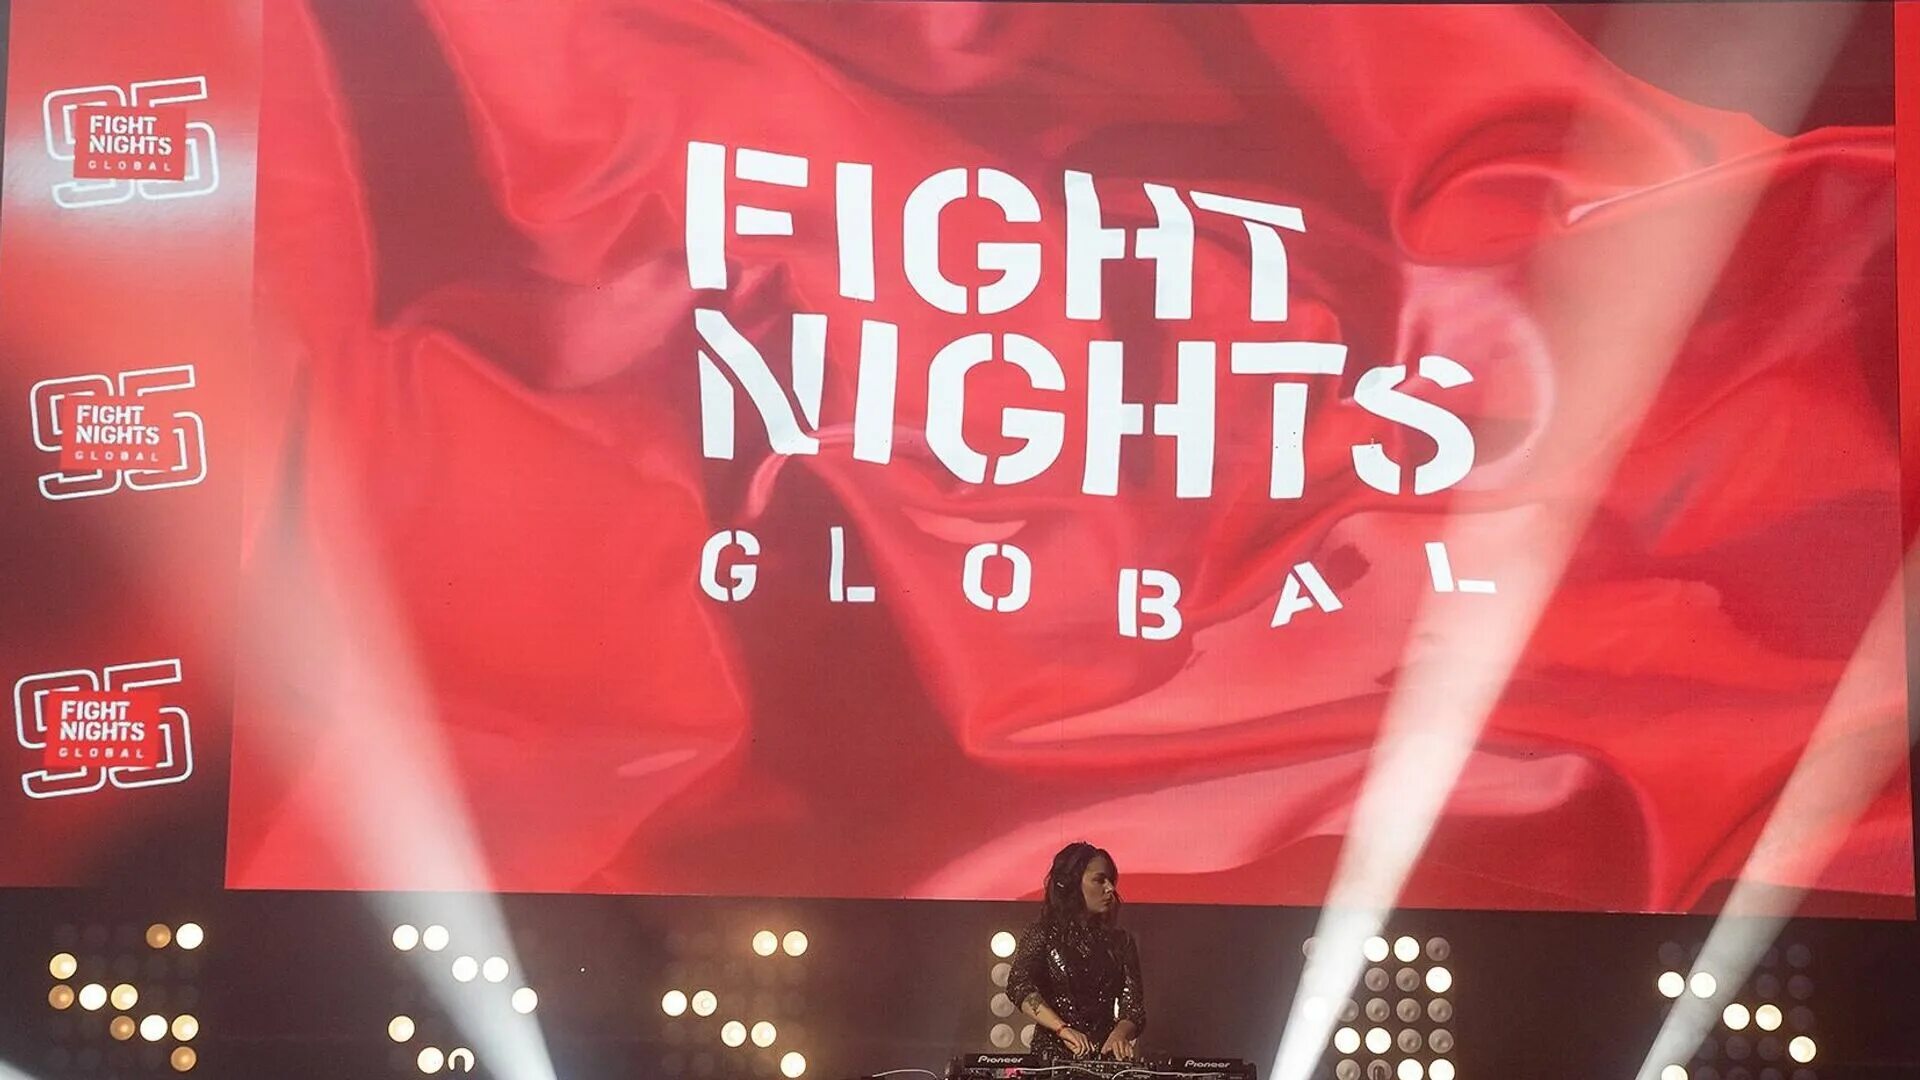 АМС файт Найт. AMC Fight Nights. Fight Night логотип. AMC Fight Nights Global. Глобал найт